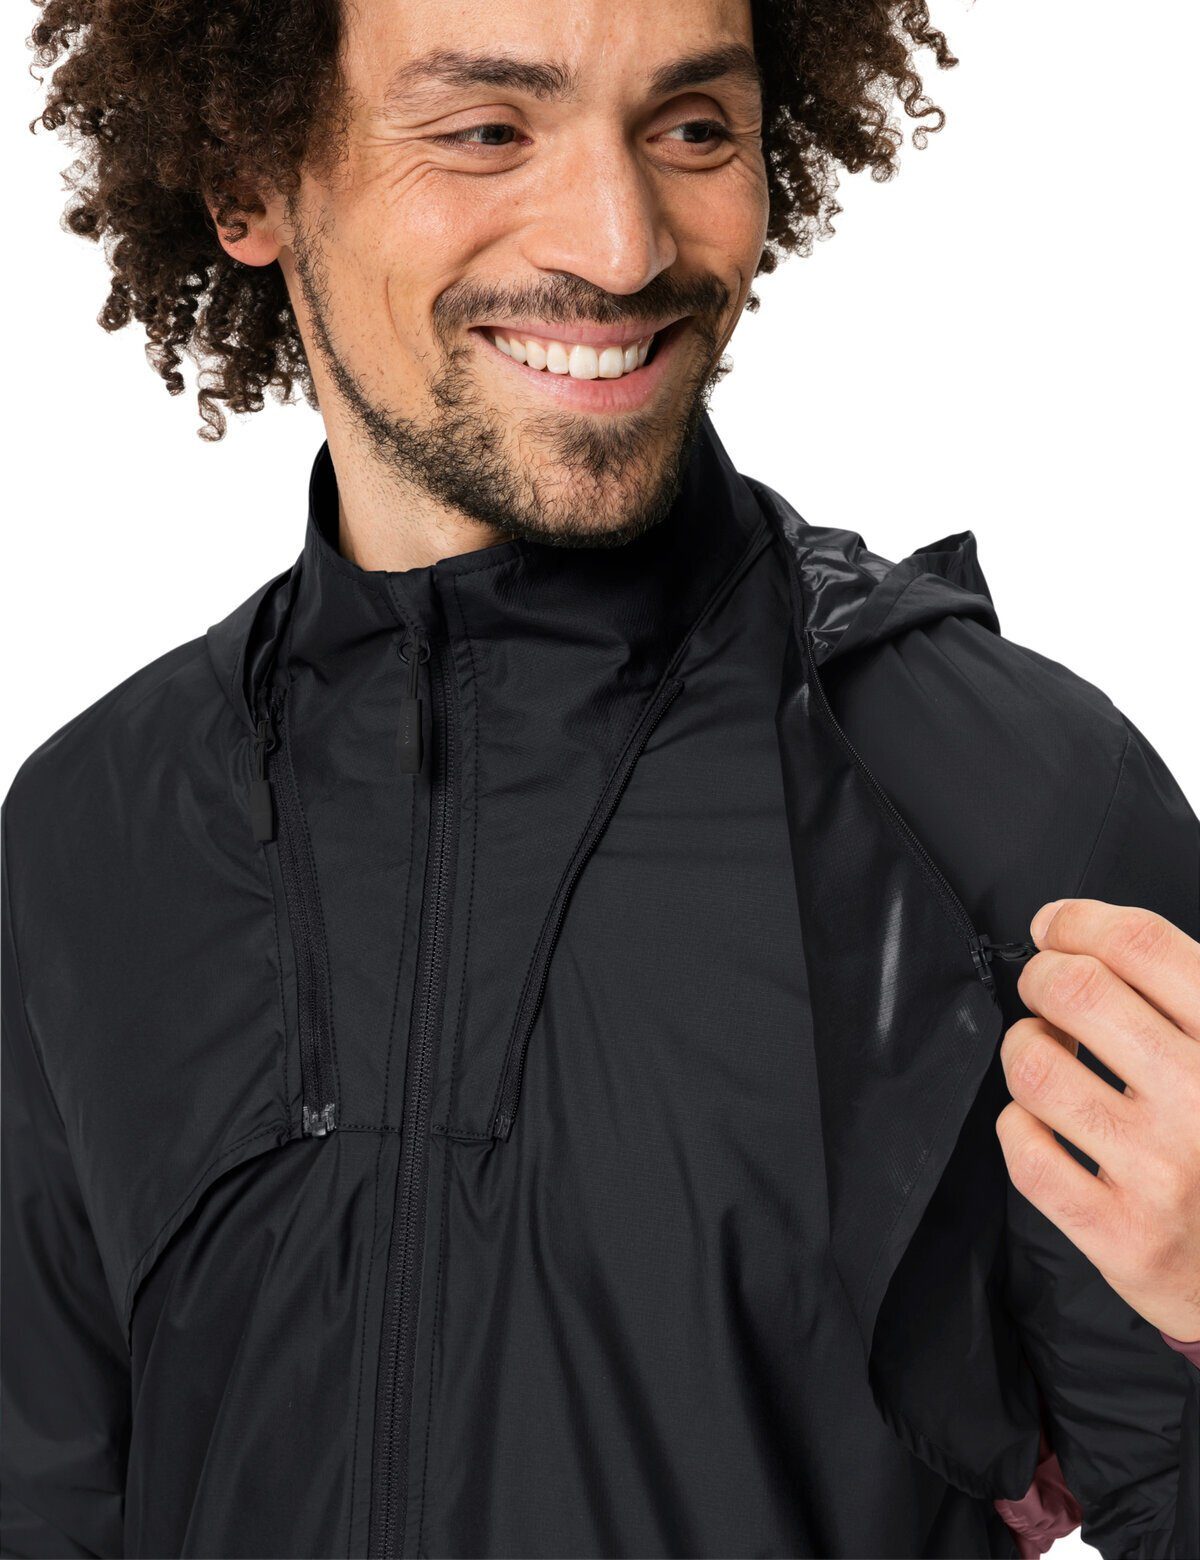 Year (1-St) Jacket All Outdoorjacke Men's ZO kompensiert black VAUDE Klimaneutral Moab Light